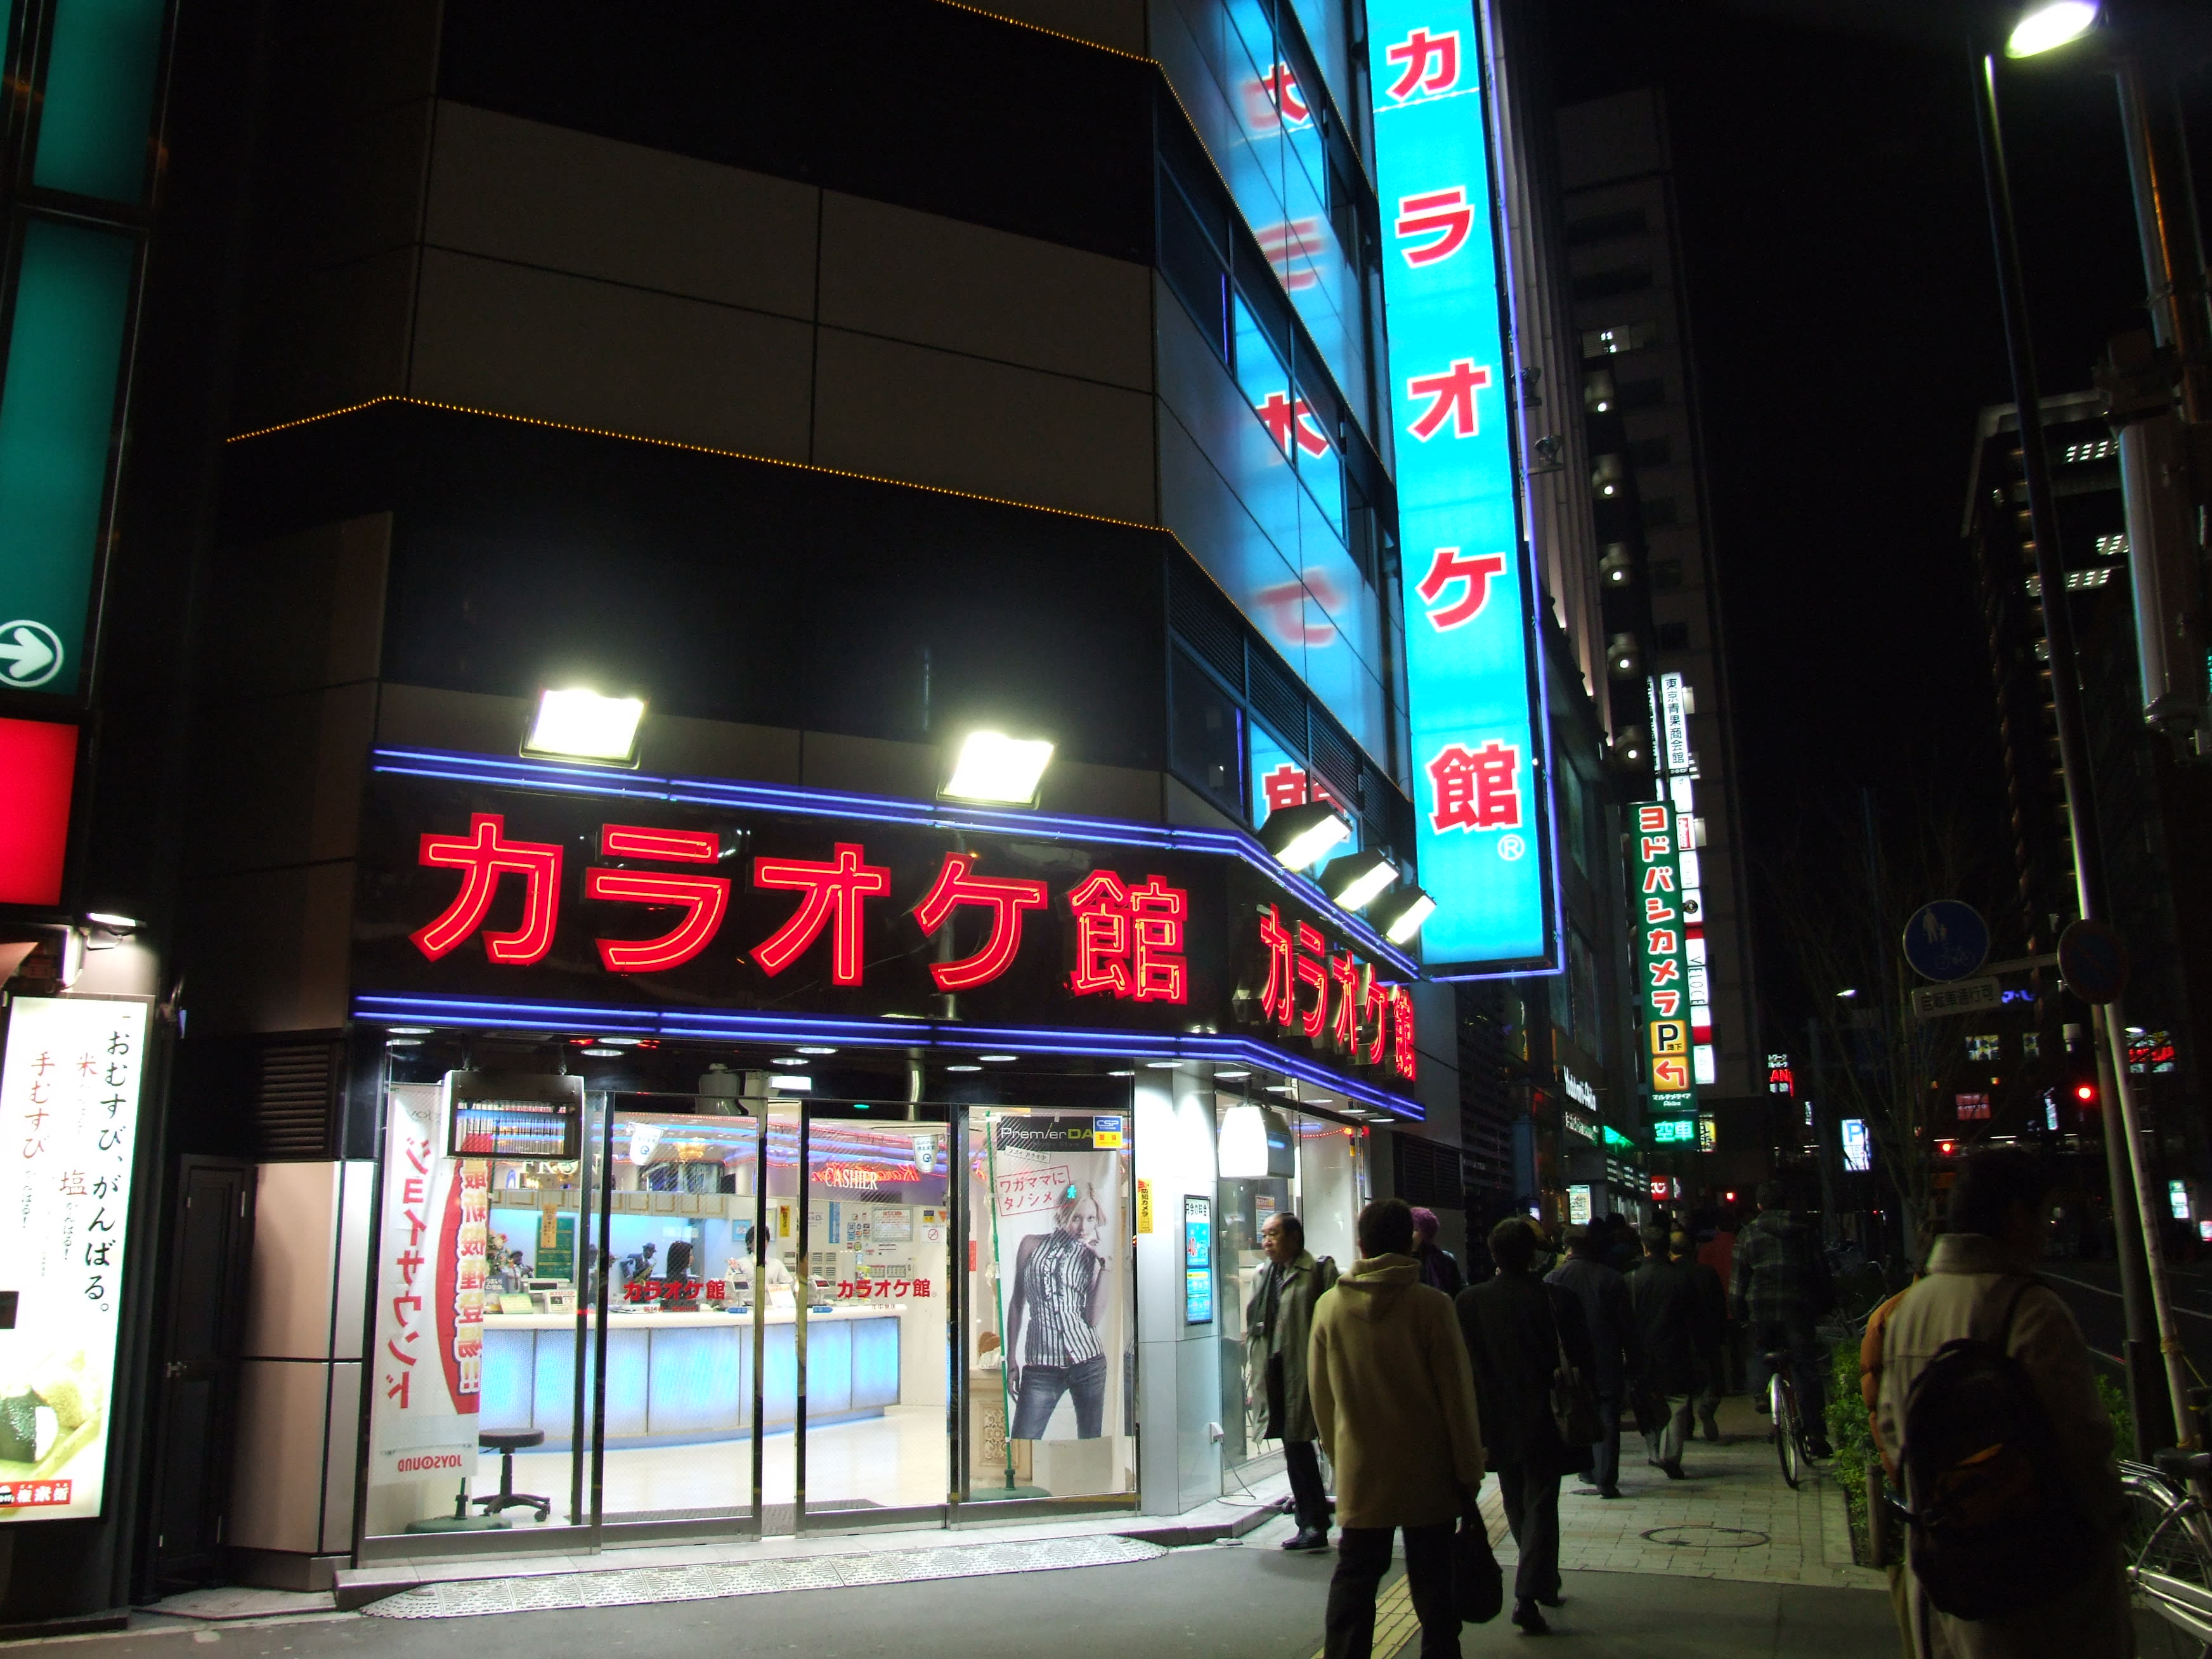 Karaoke In Japan Japanische Karaoke Bars Japan Reise Japanische Fremdenverkehrszentrale Jnto 